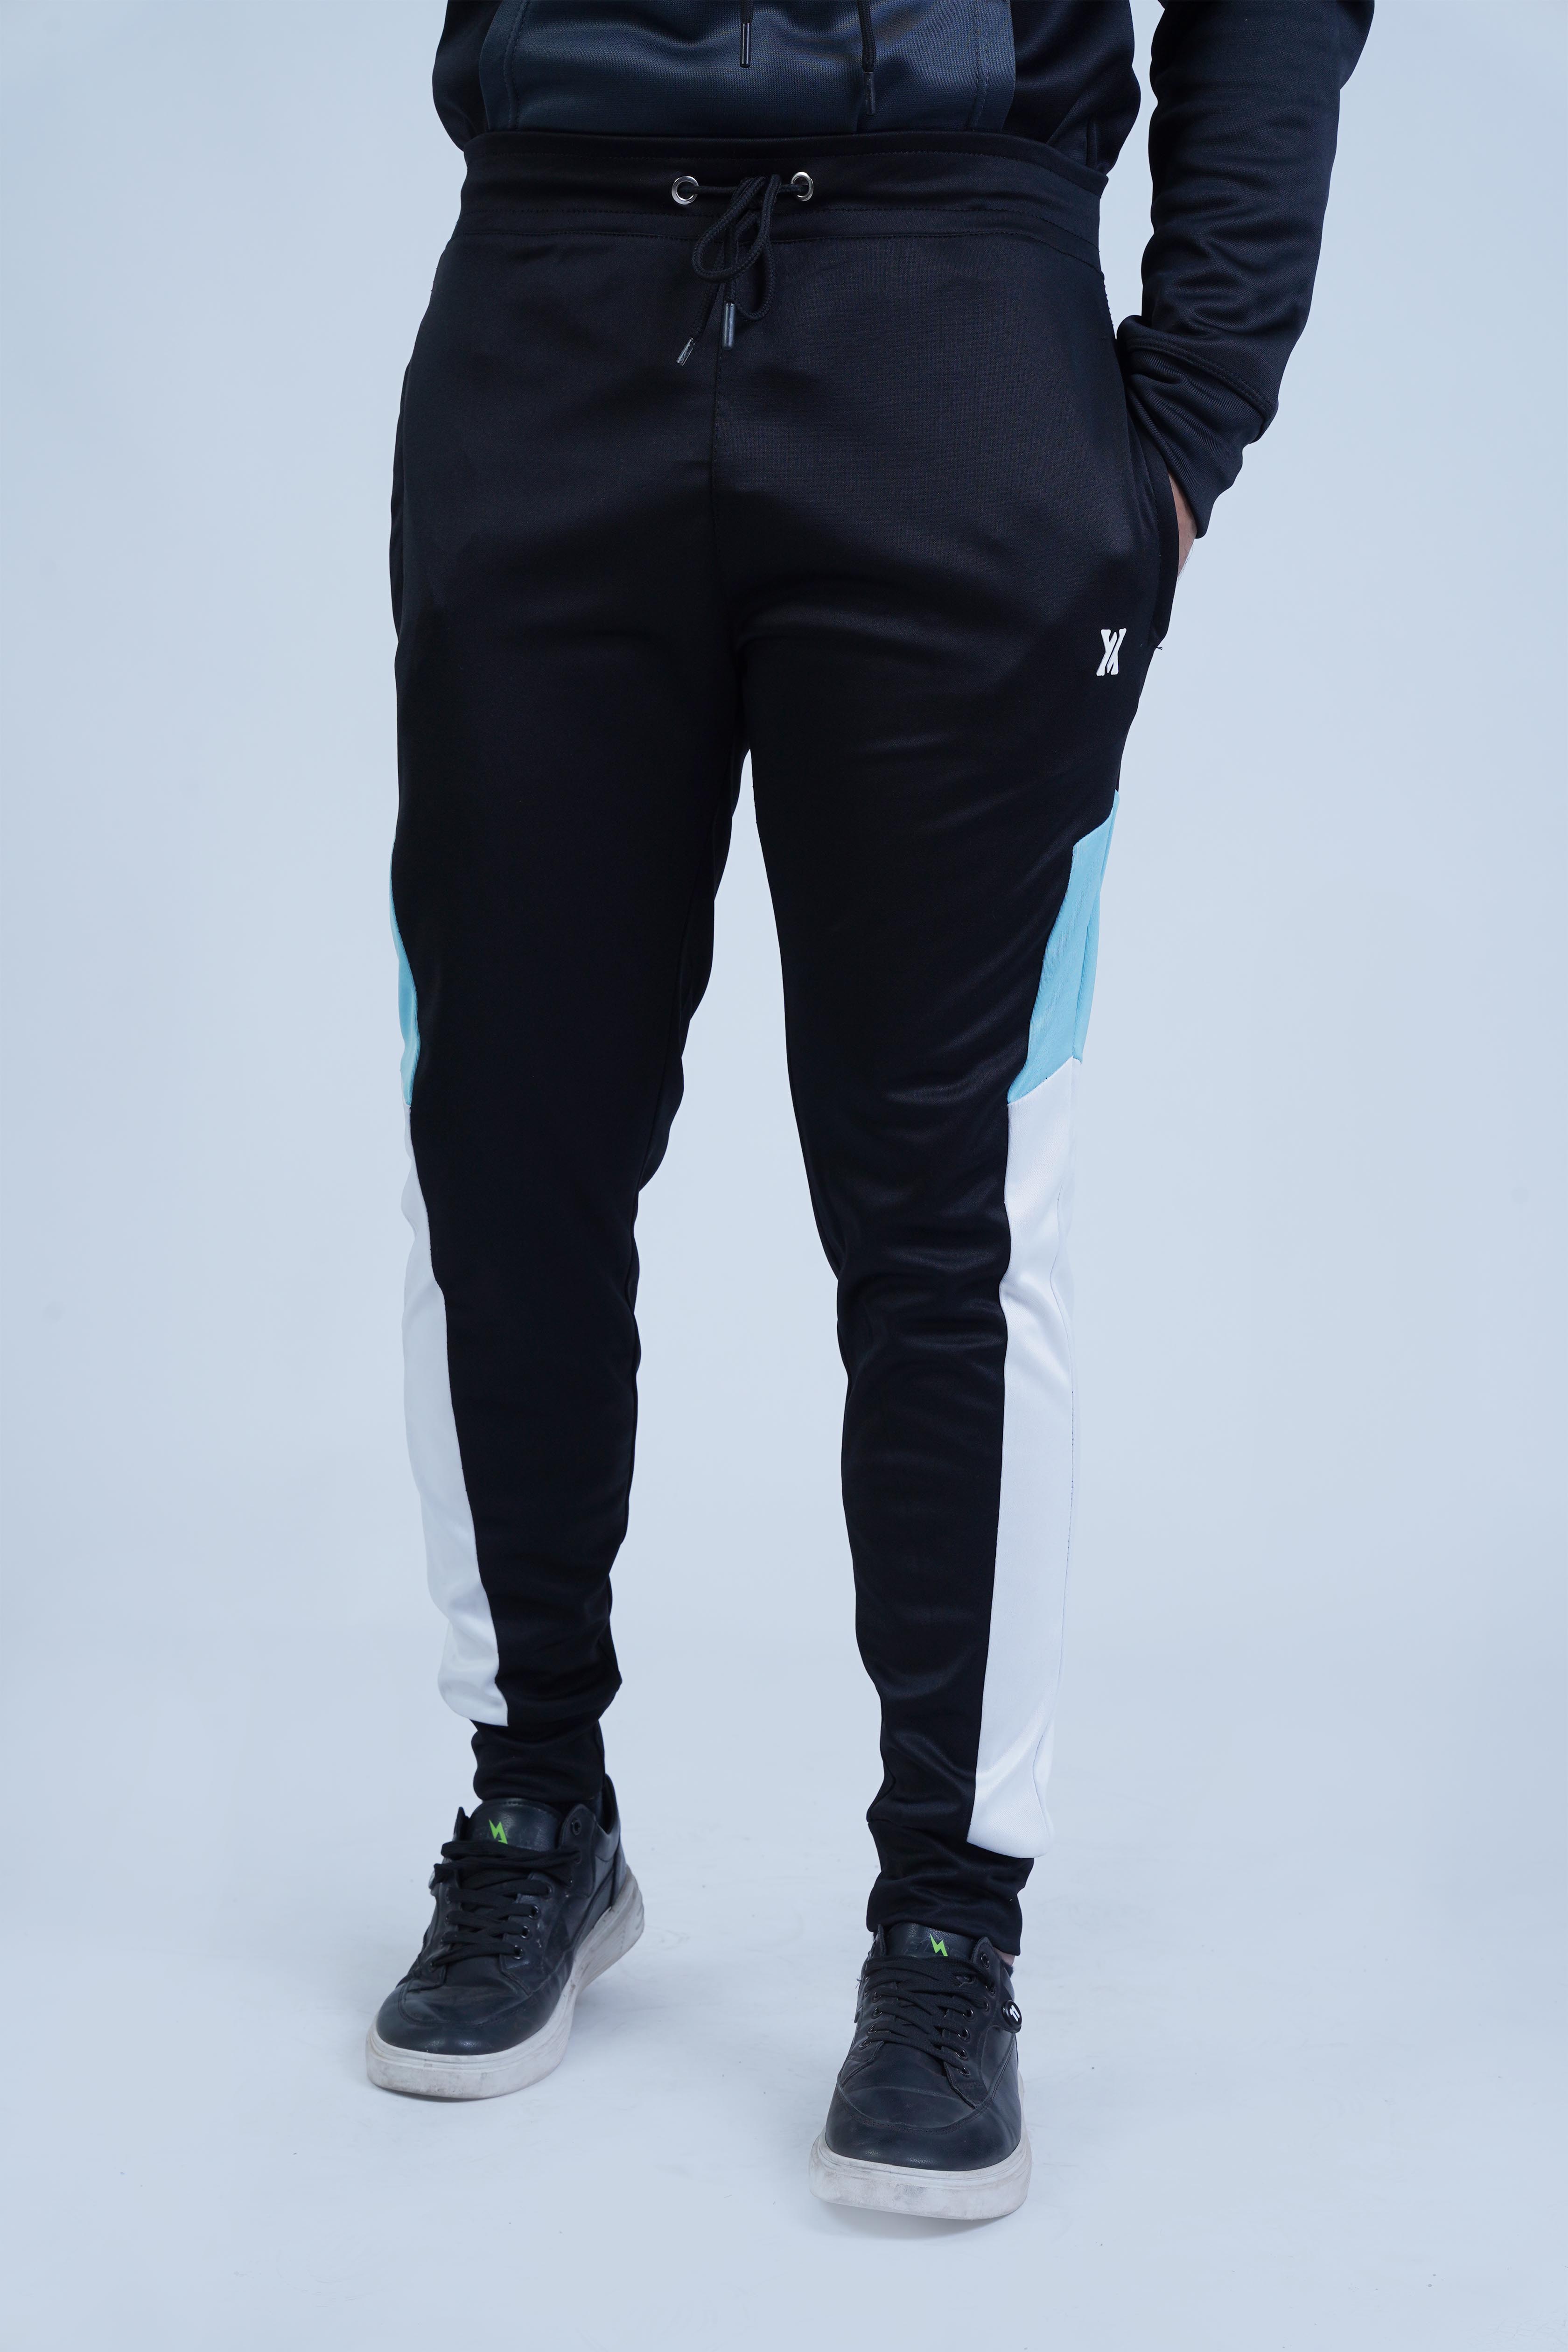 Mellow Paneled Black Men Trouser - The Xea Men's Clothing